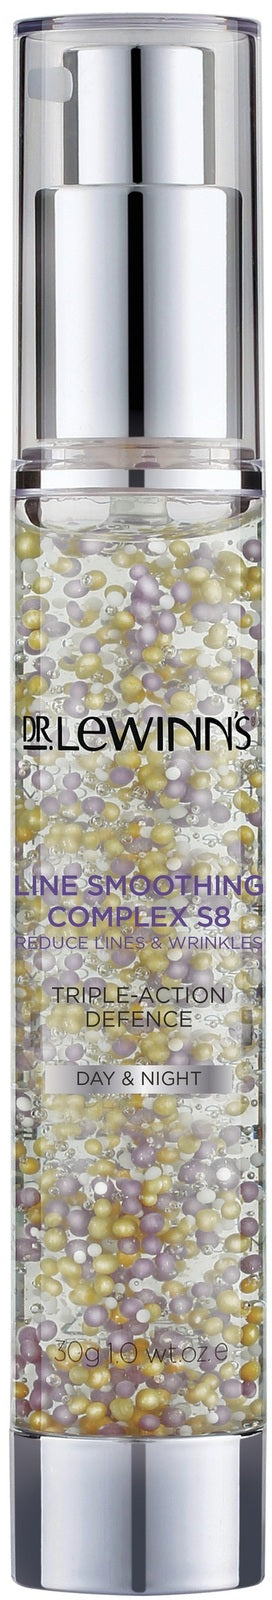 Dr Lewinn's: Line Smoothing Complex Gift Set